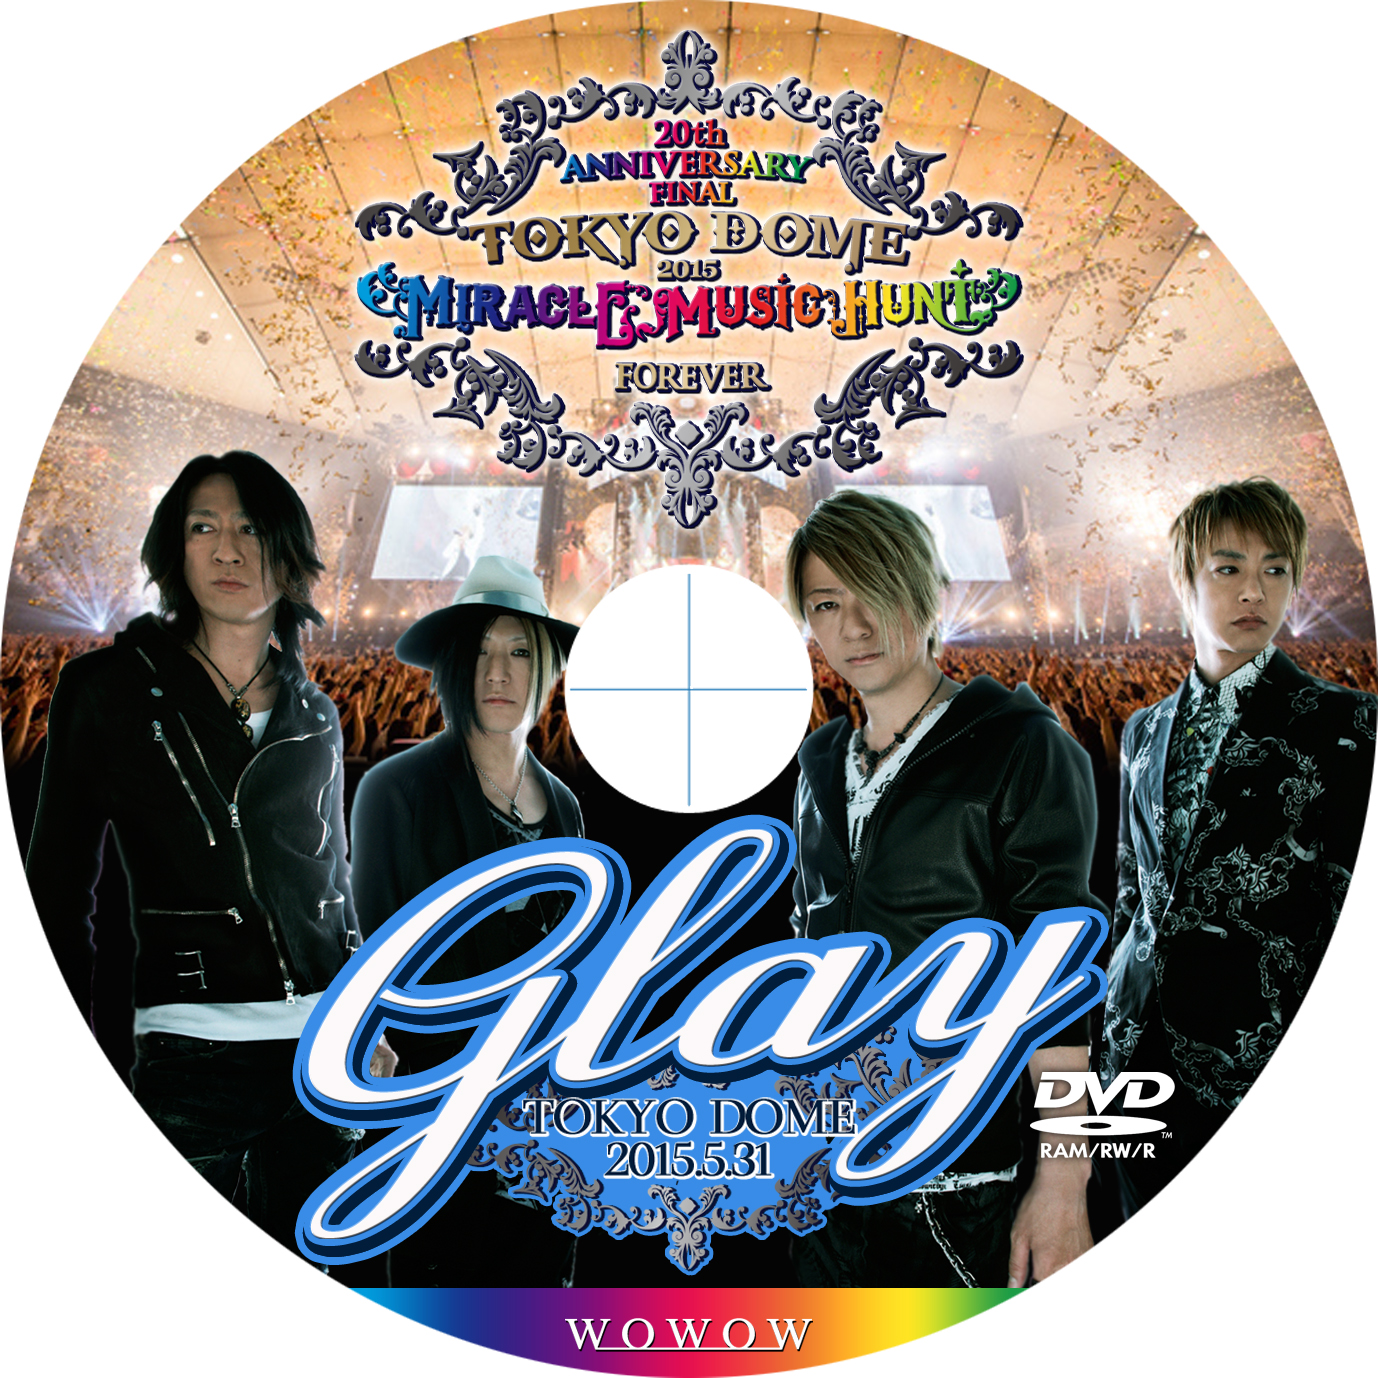 GLAY/20th Anniversary Final GLAY in TOK…Blu